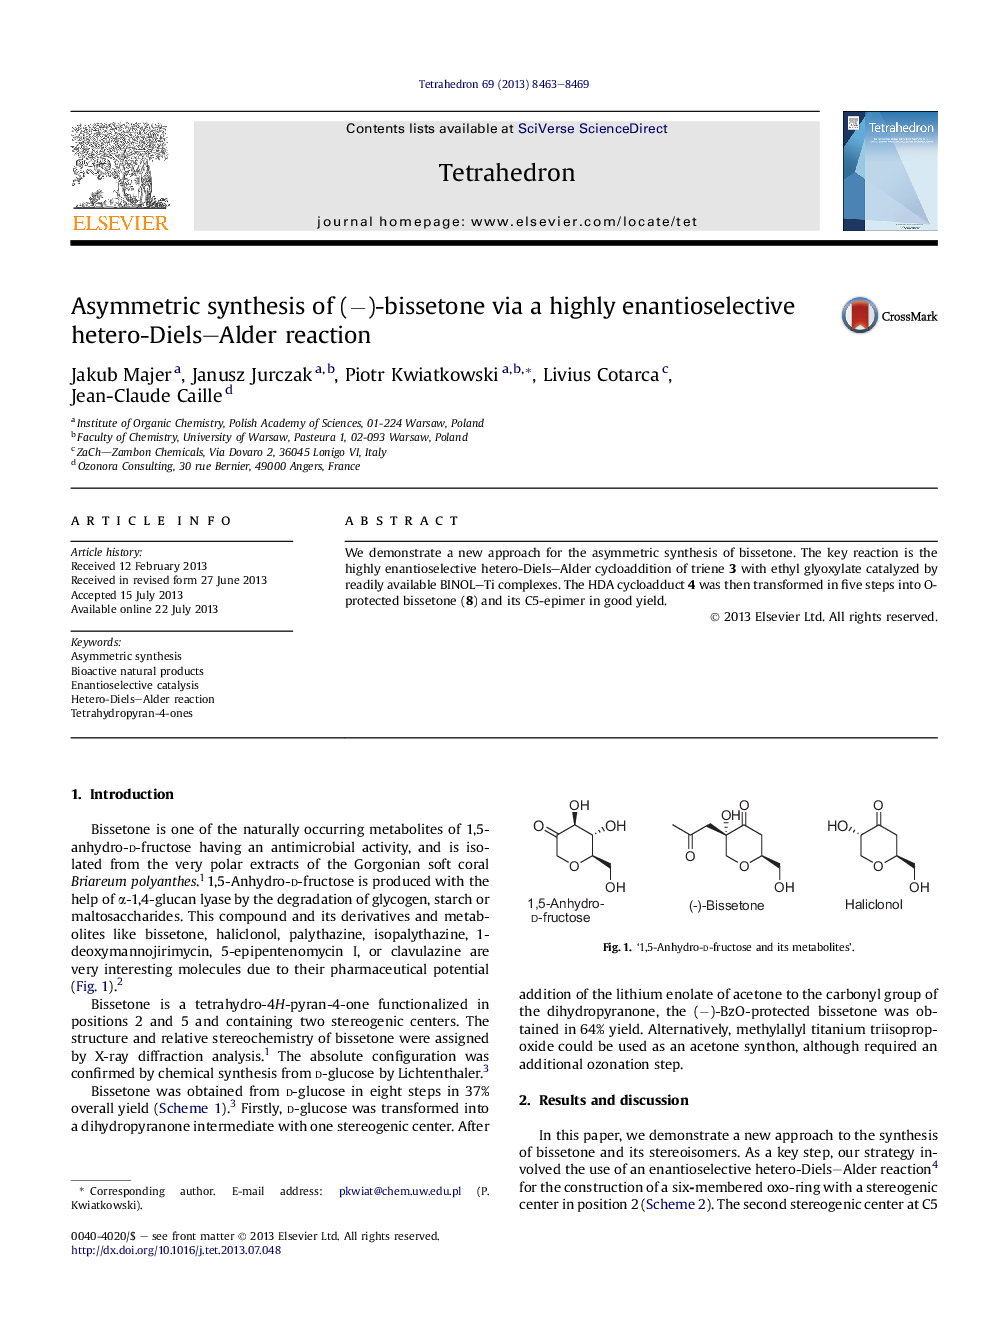 Asymmetric synthesis of (â)-bissetone via a highly enantioselective hetero-Diels-Alder reaction